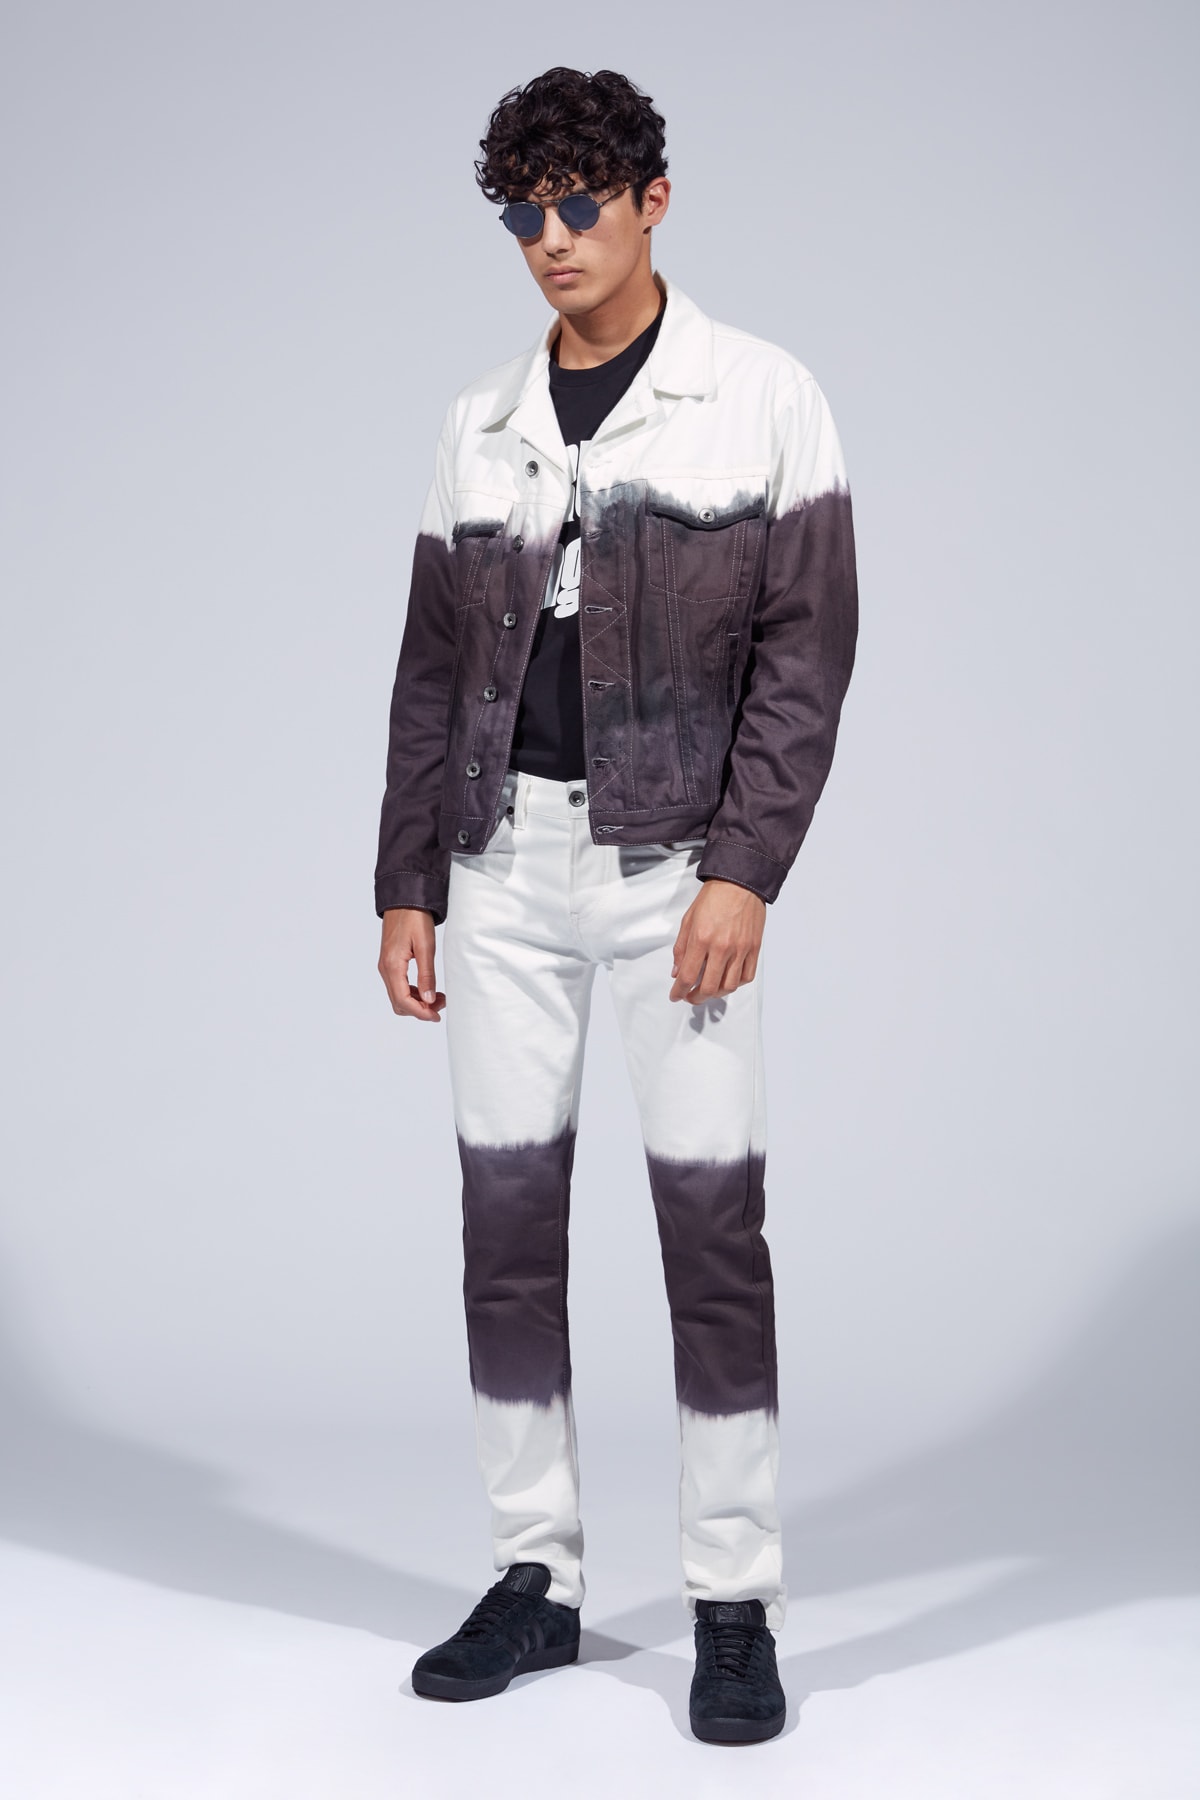 Fiorucci Spring Summer 2019 Collection Lookbook Denim Jacket Pants Brown White